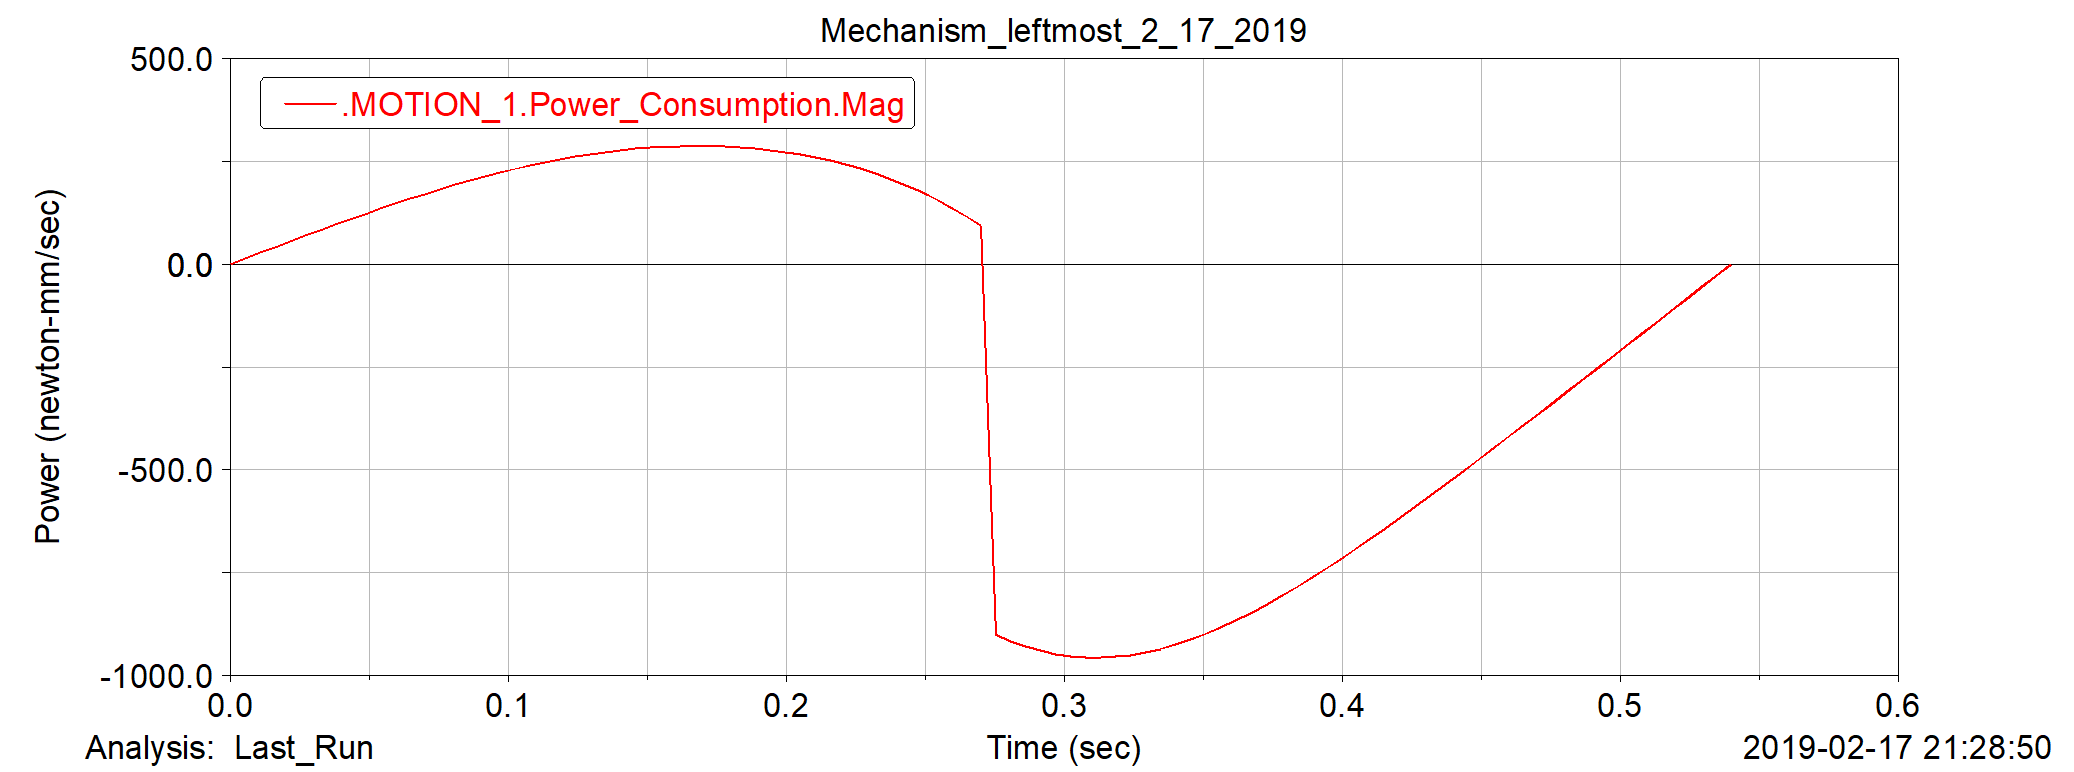 ADAMS simulation result of the mechanism power consumption versus seconds.